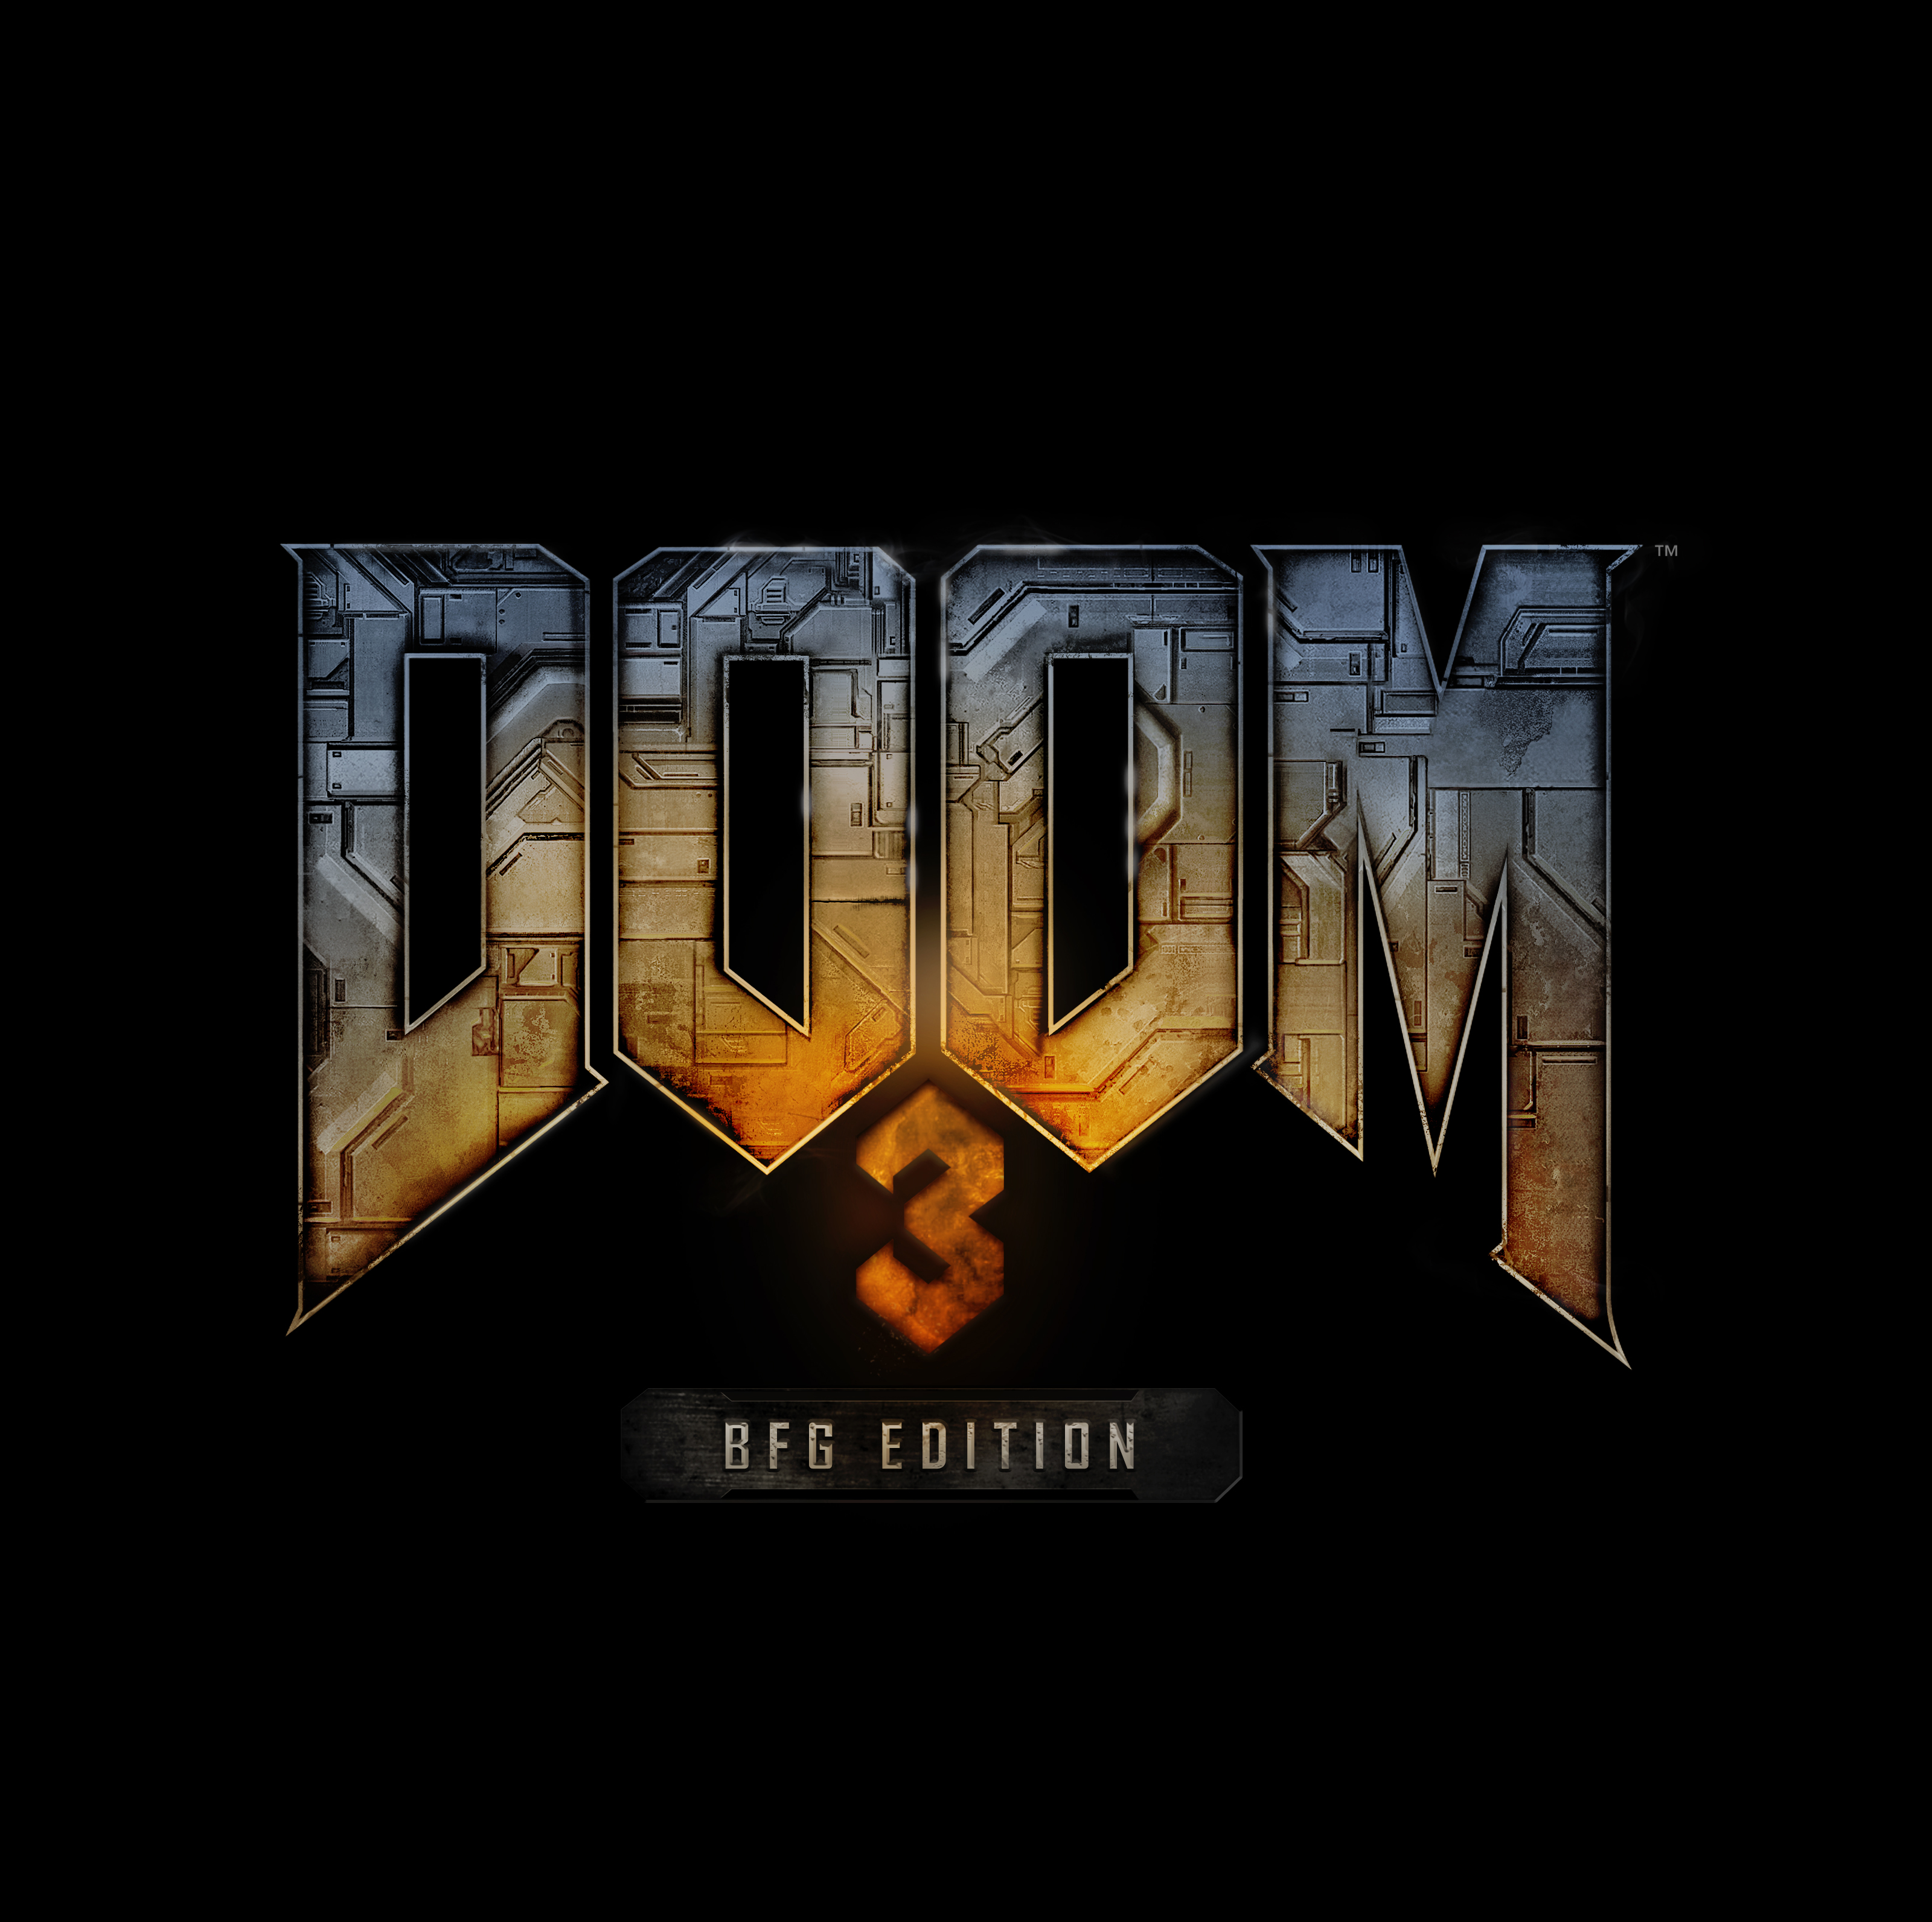 Doom Bfg Edition Prisjakt Kr Specialutg Va